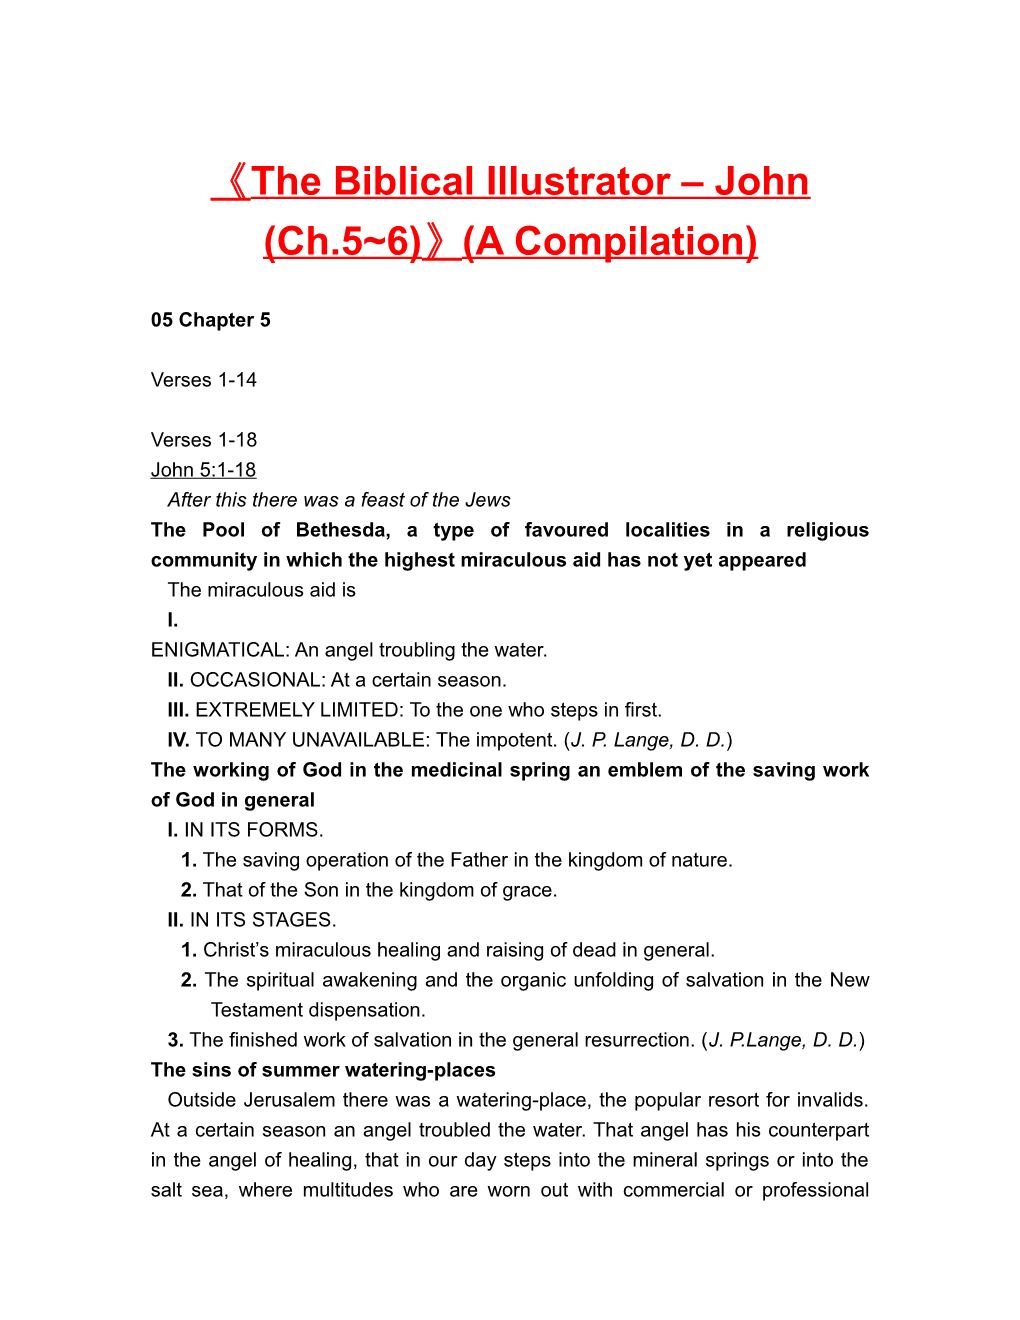 The Biblical Illustrator John (Ch.5 6) (A Compilation)